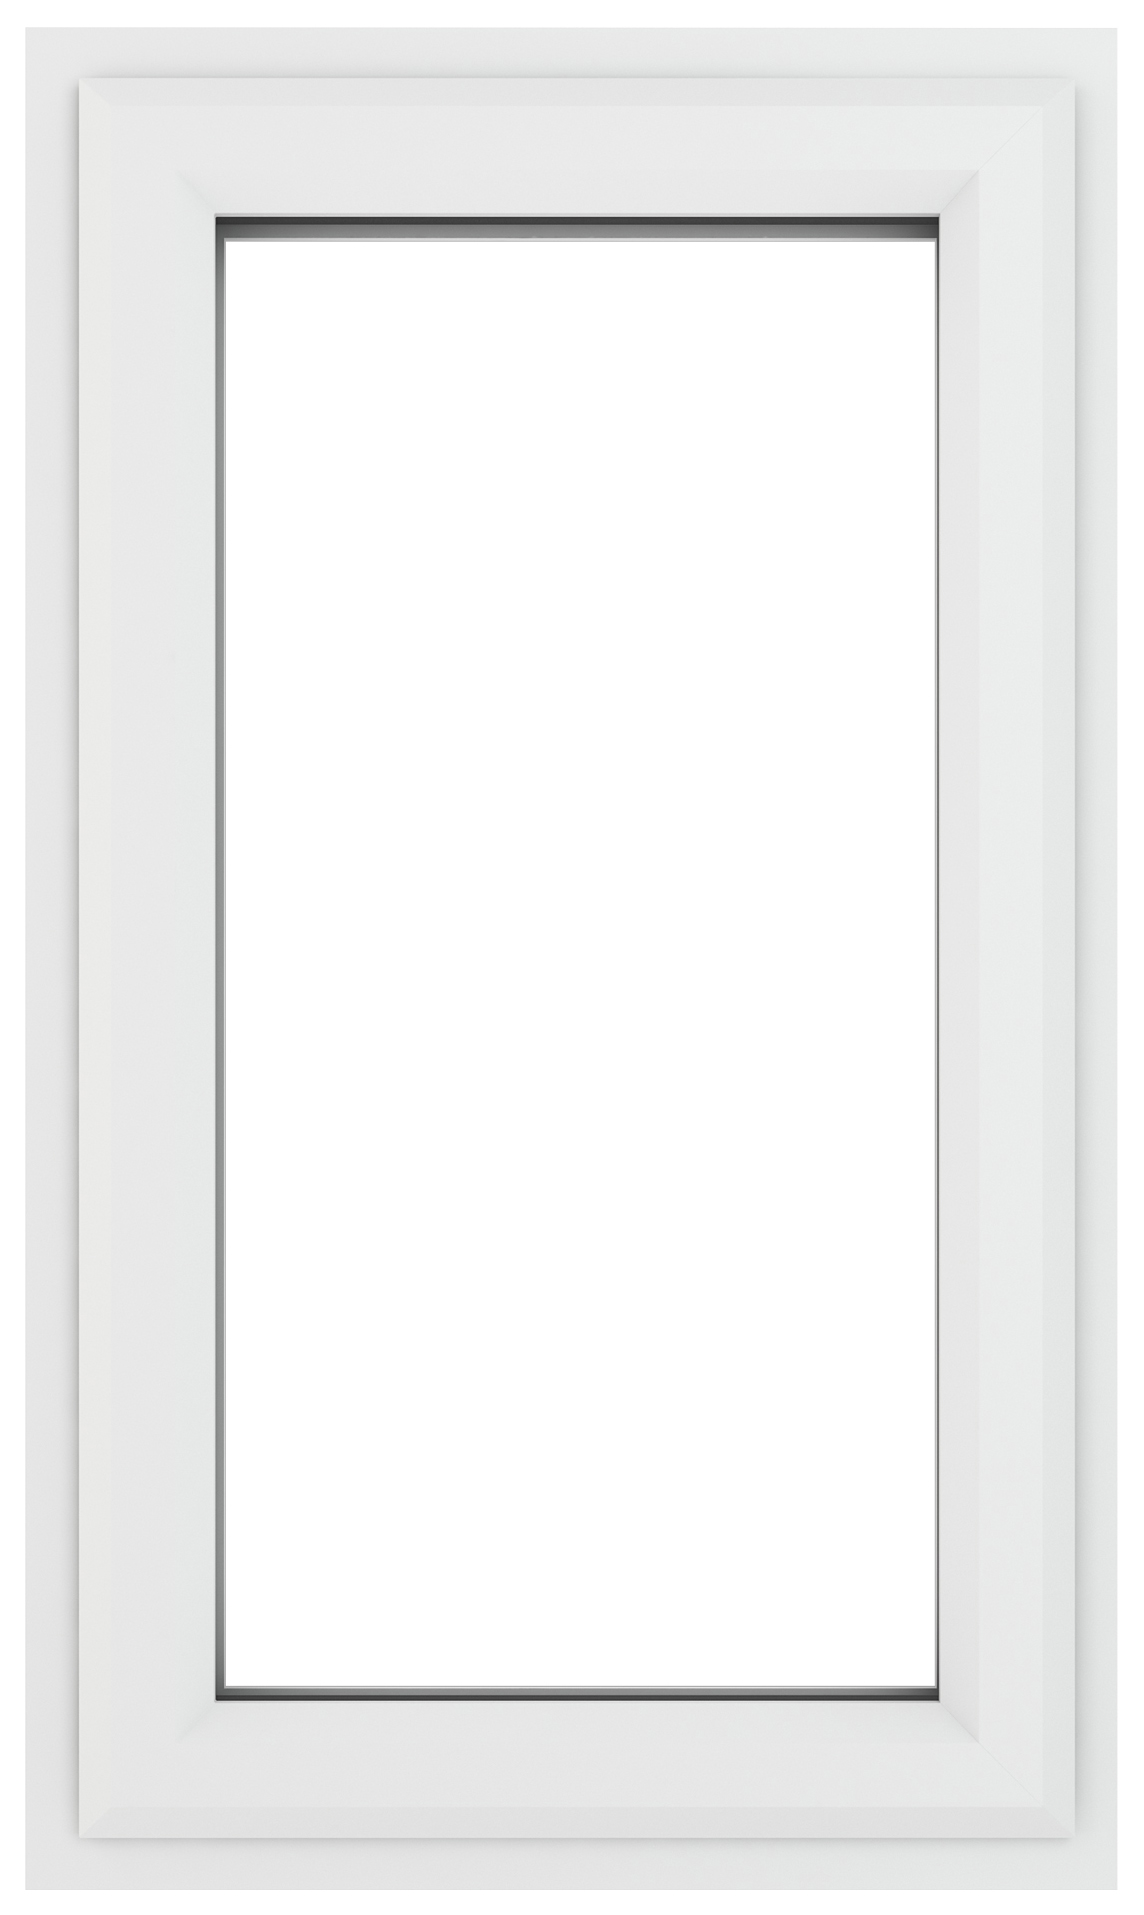 Crystal uPVC White Left Hand Clear Triple Glazed Window - 610 x 1115mm